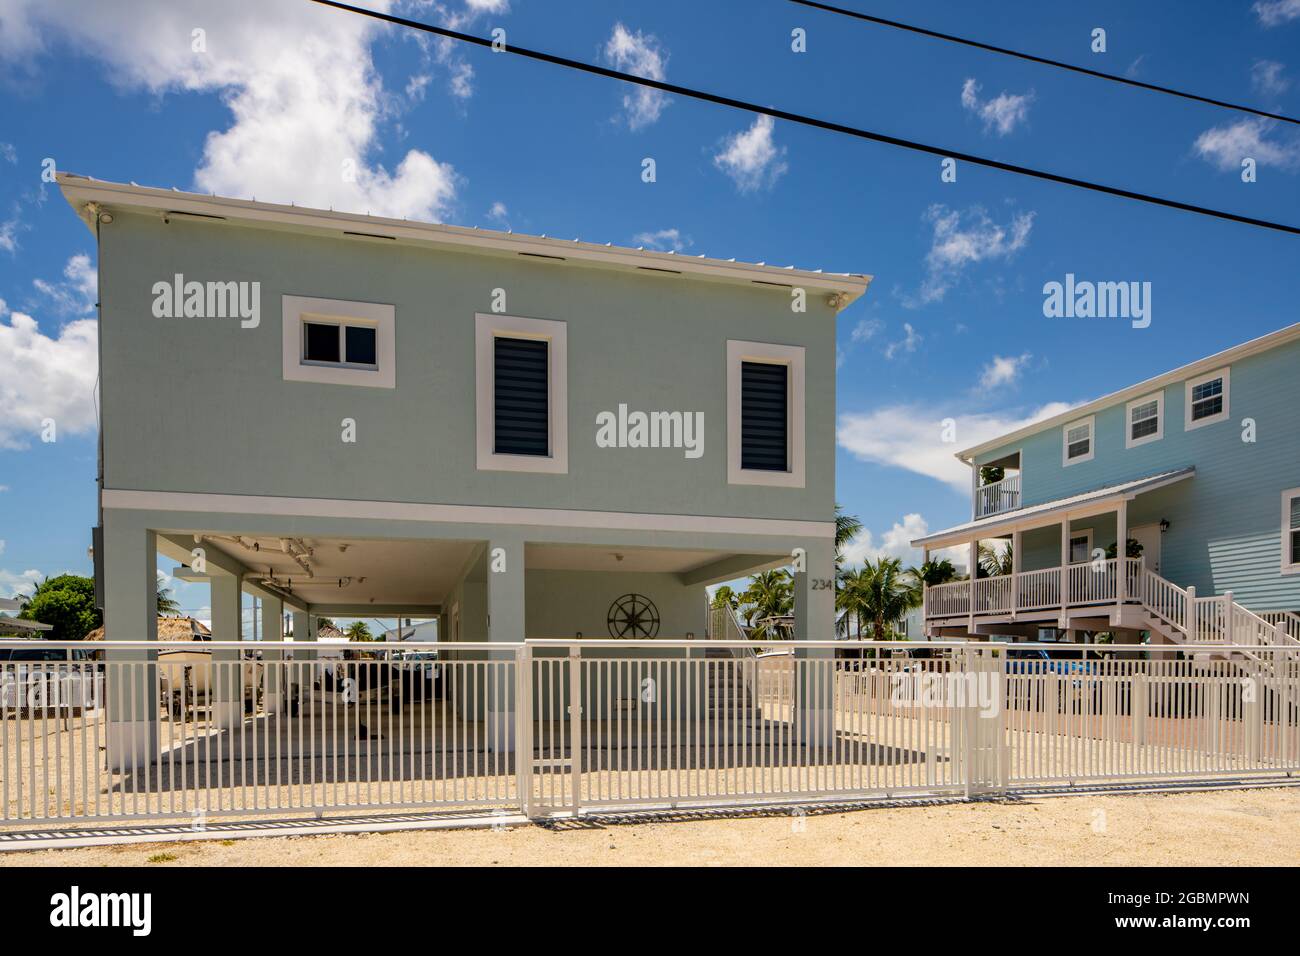 Key Largo, FL, USA - August 1, 2021: Style of homes in Key LArgo Florida Keys USA Stock Photo